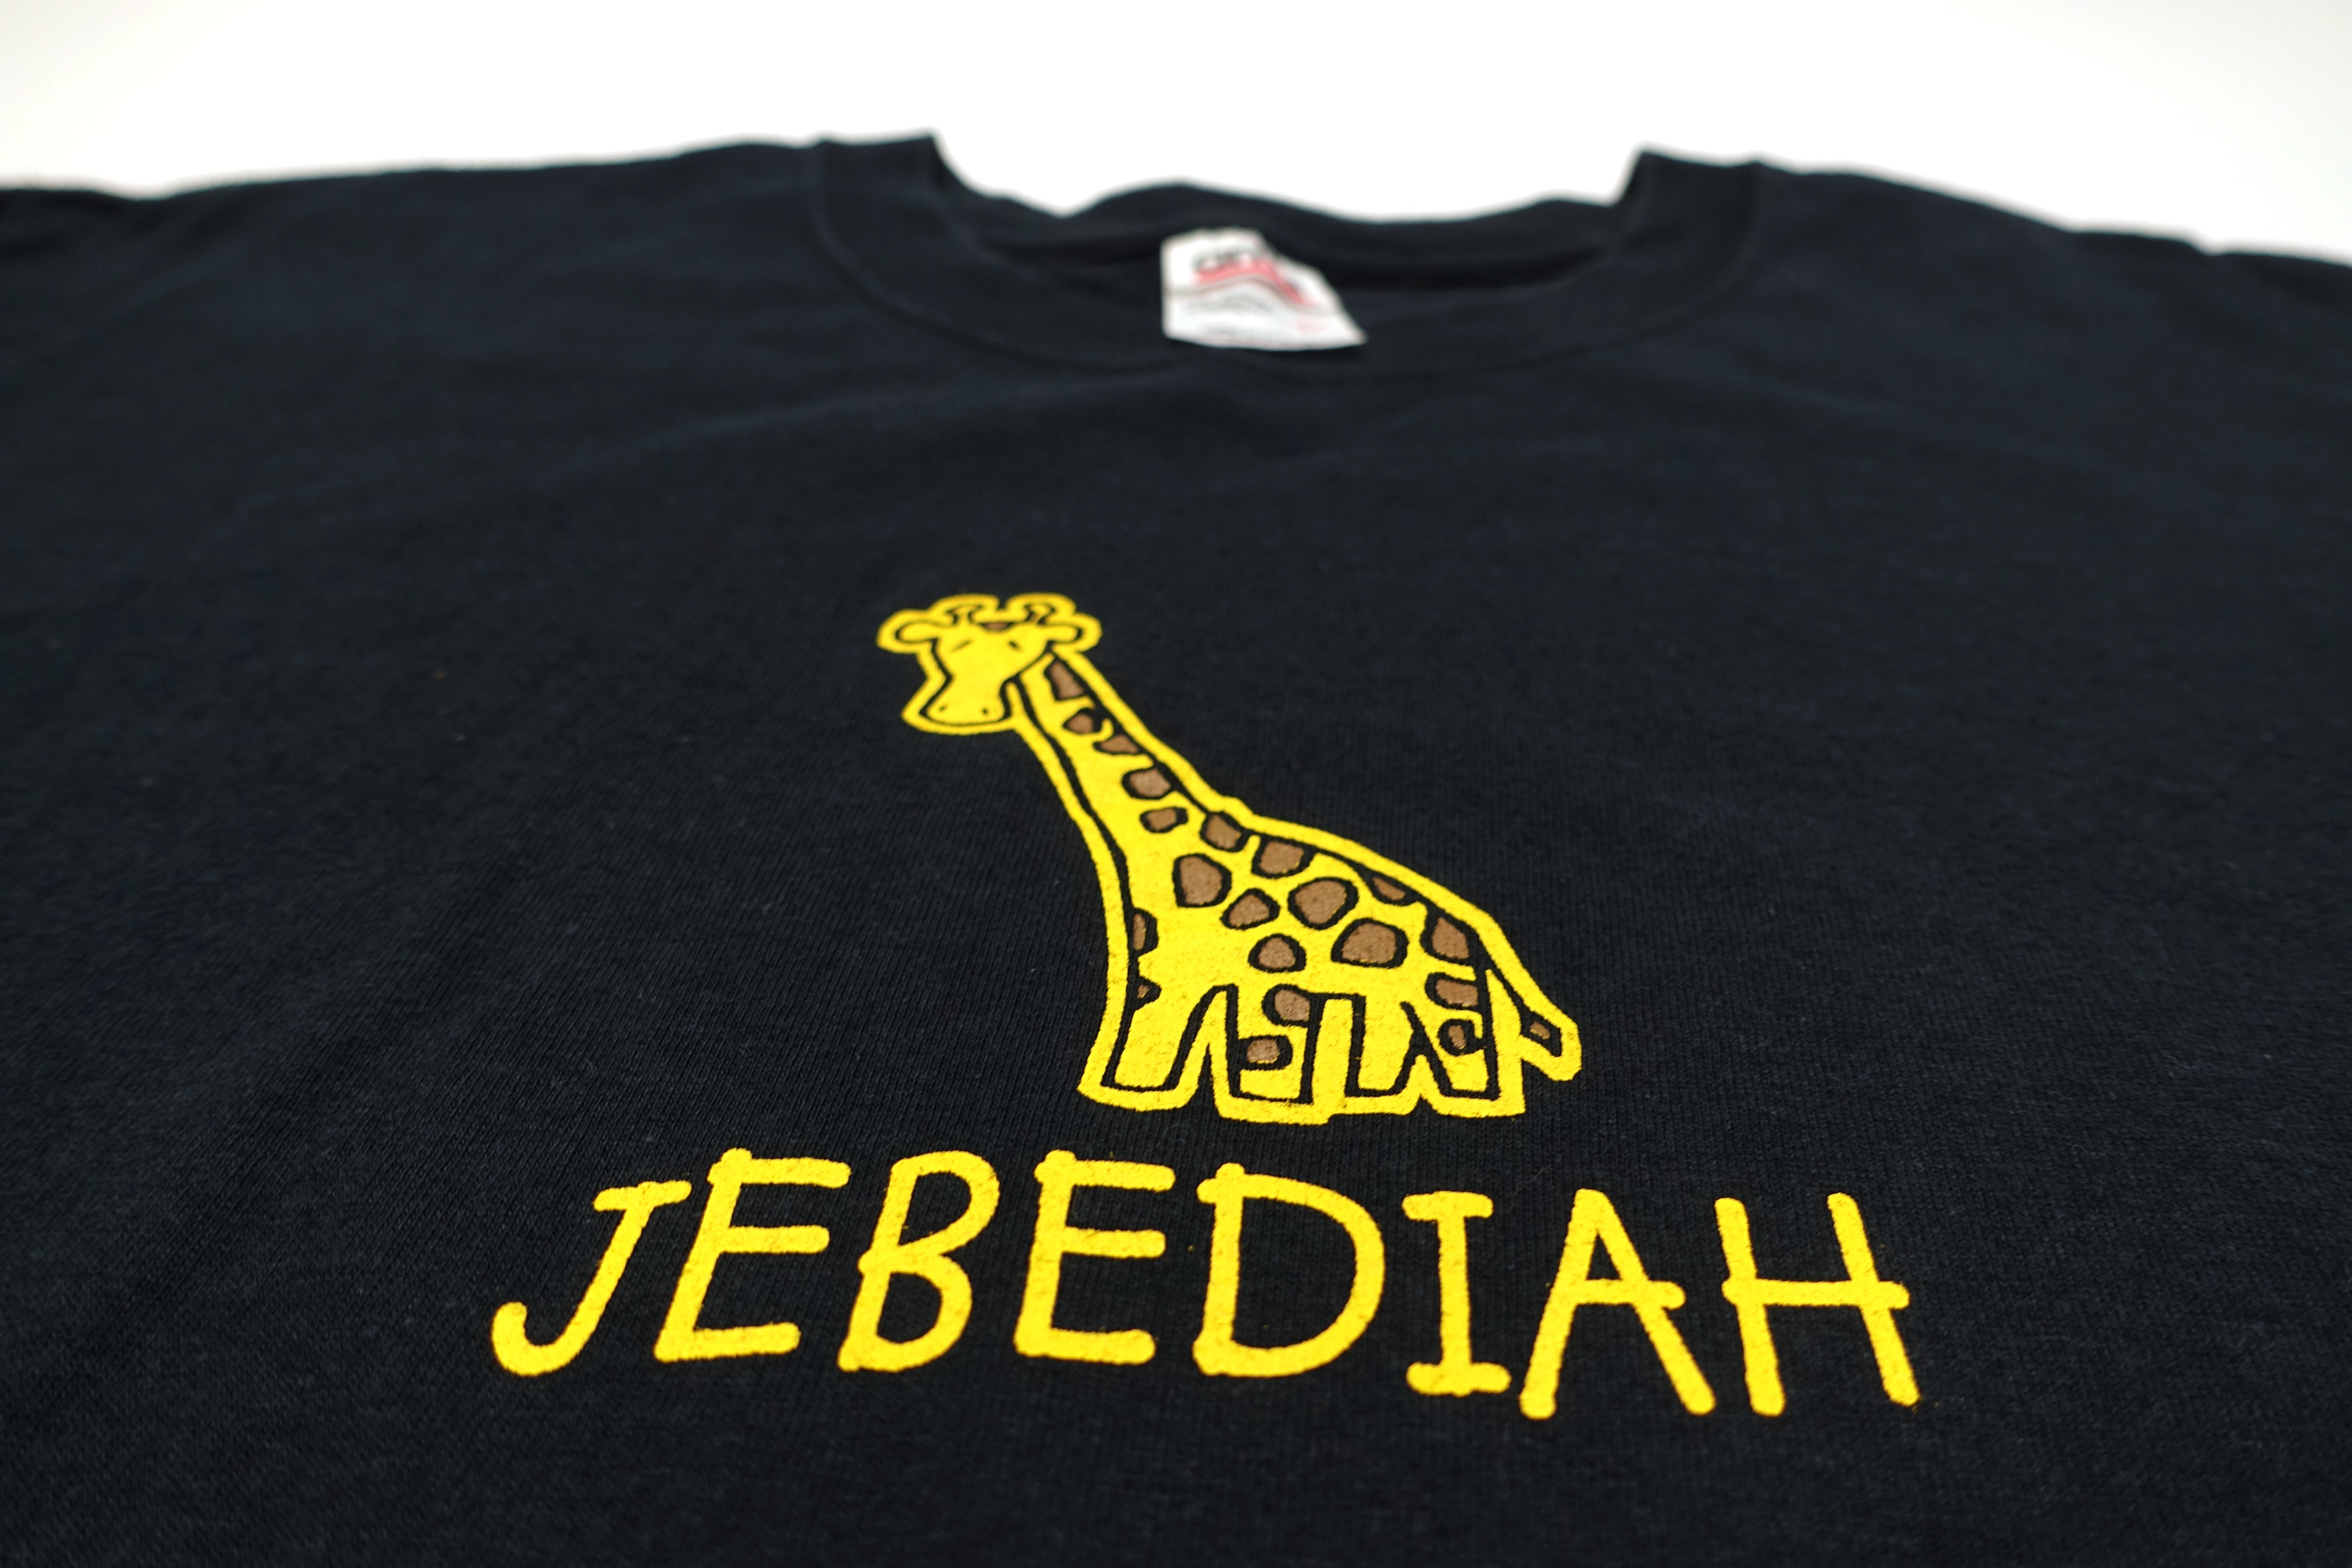 Jebediah - Giraffe 90's Tour Shirt Size Large